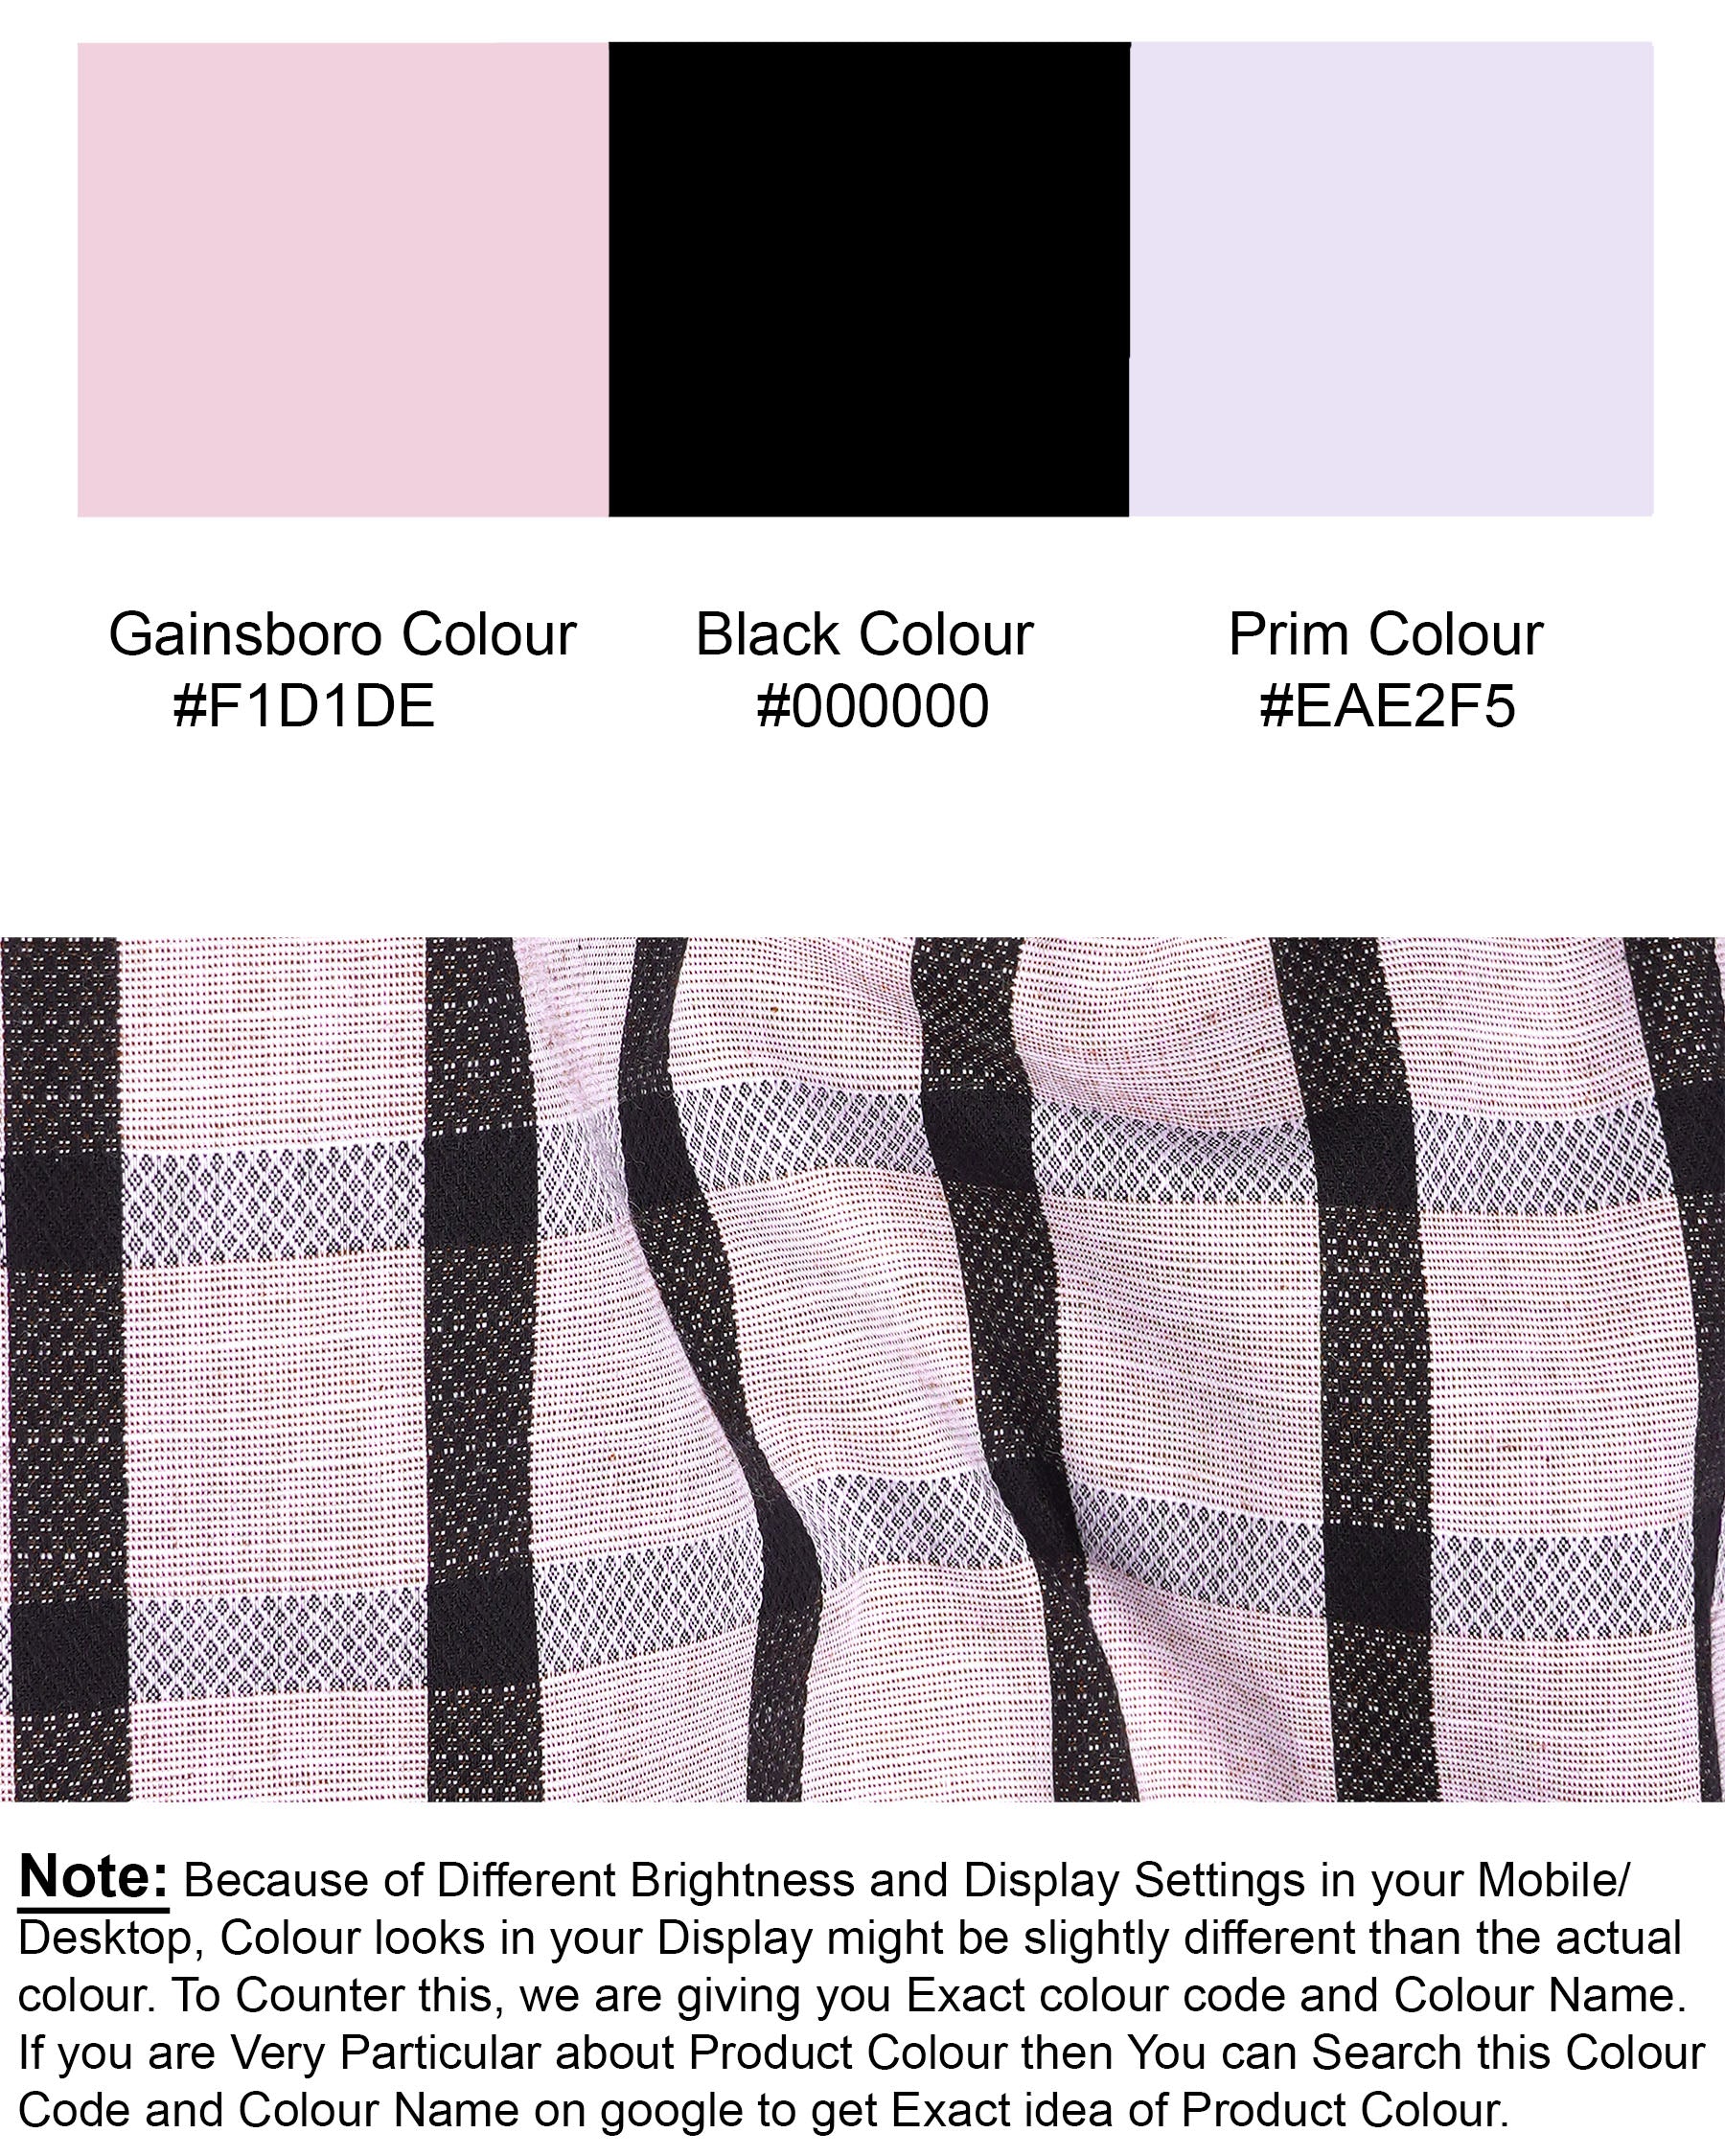 Gainsboro Pink and Jade Black Plaid Dobby Textured Premium Giza Cotton Shirt 7627-BD-BLK-38,7627-BD-BLK-38,7627-BD-BLK-39,7627-BD-BLK-39,7627-BD-BLK-40,7627-BD-BLK-40,7627-BD-BLK-42,7627-BD-BLK-42,7627-BD-BLK-44,7627-BD-BLK-44,7627-BD-BLK-46,7627-BD-BLK-46,7627-BD-BLK-48,7627-BD-BLK-48,7627-BD-BLK-50,7627-BD-BLK-50,7627-BD-BLK-52,7627-BD-BLK-52